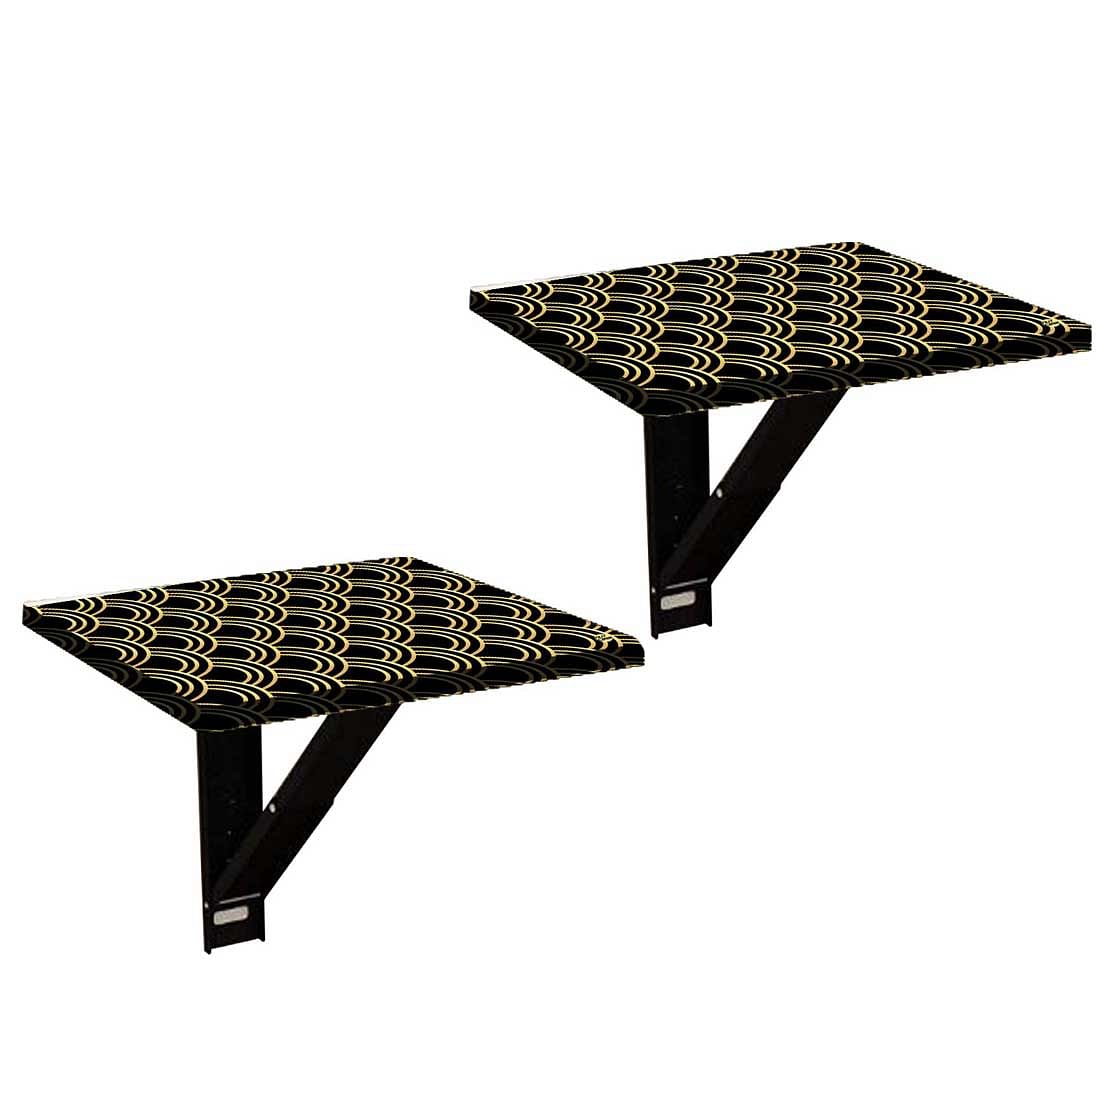 Folding Wall Mounted Bedside Table - Golden Design Pattern Nutcase